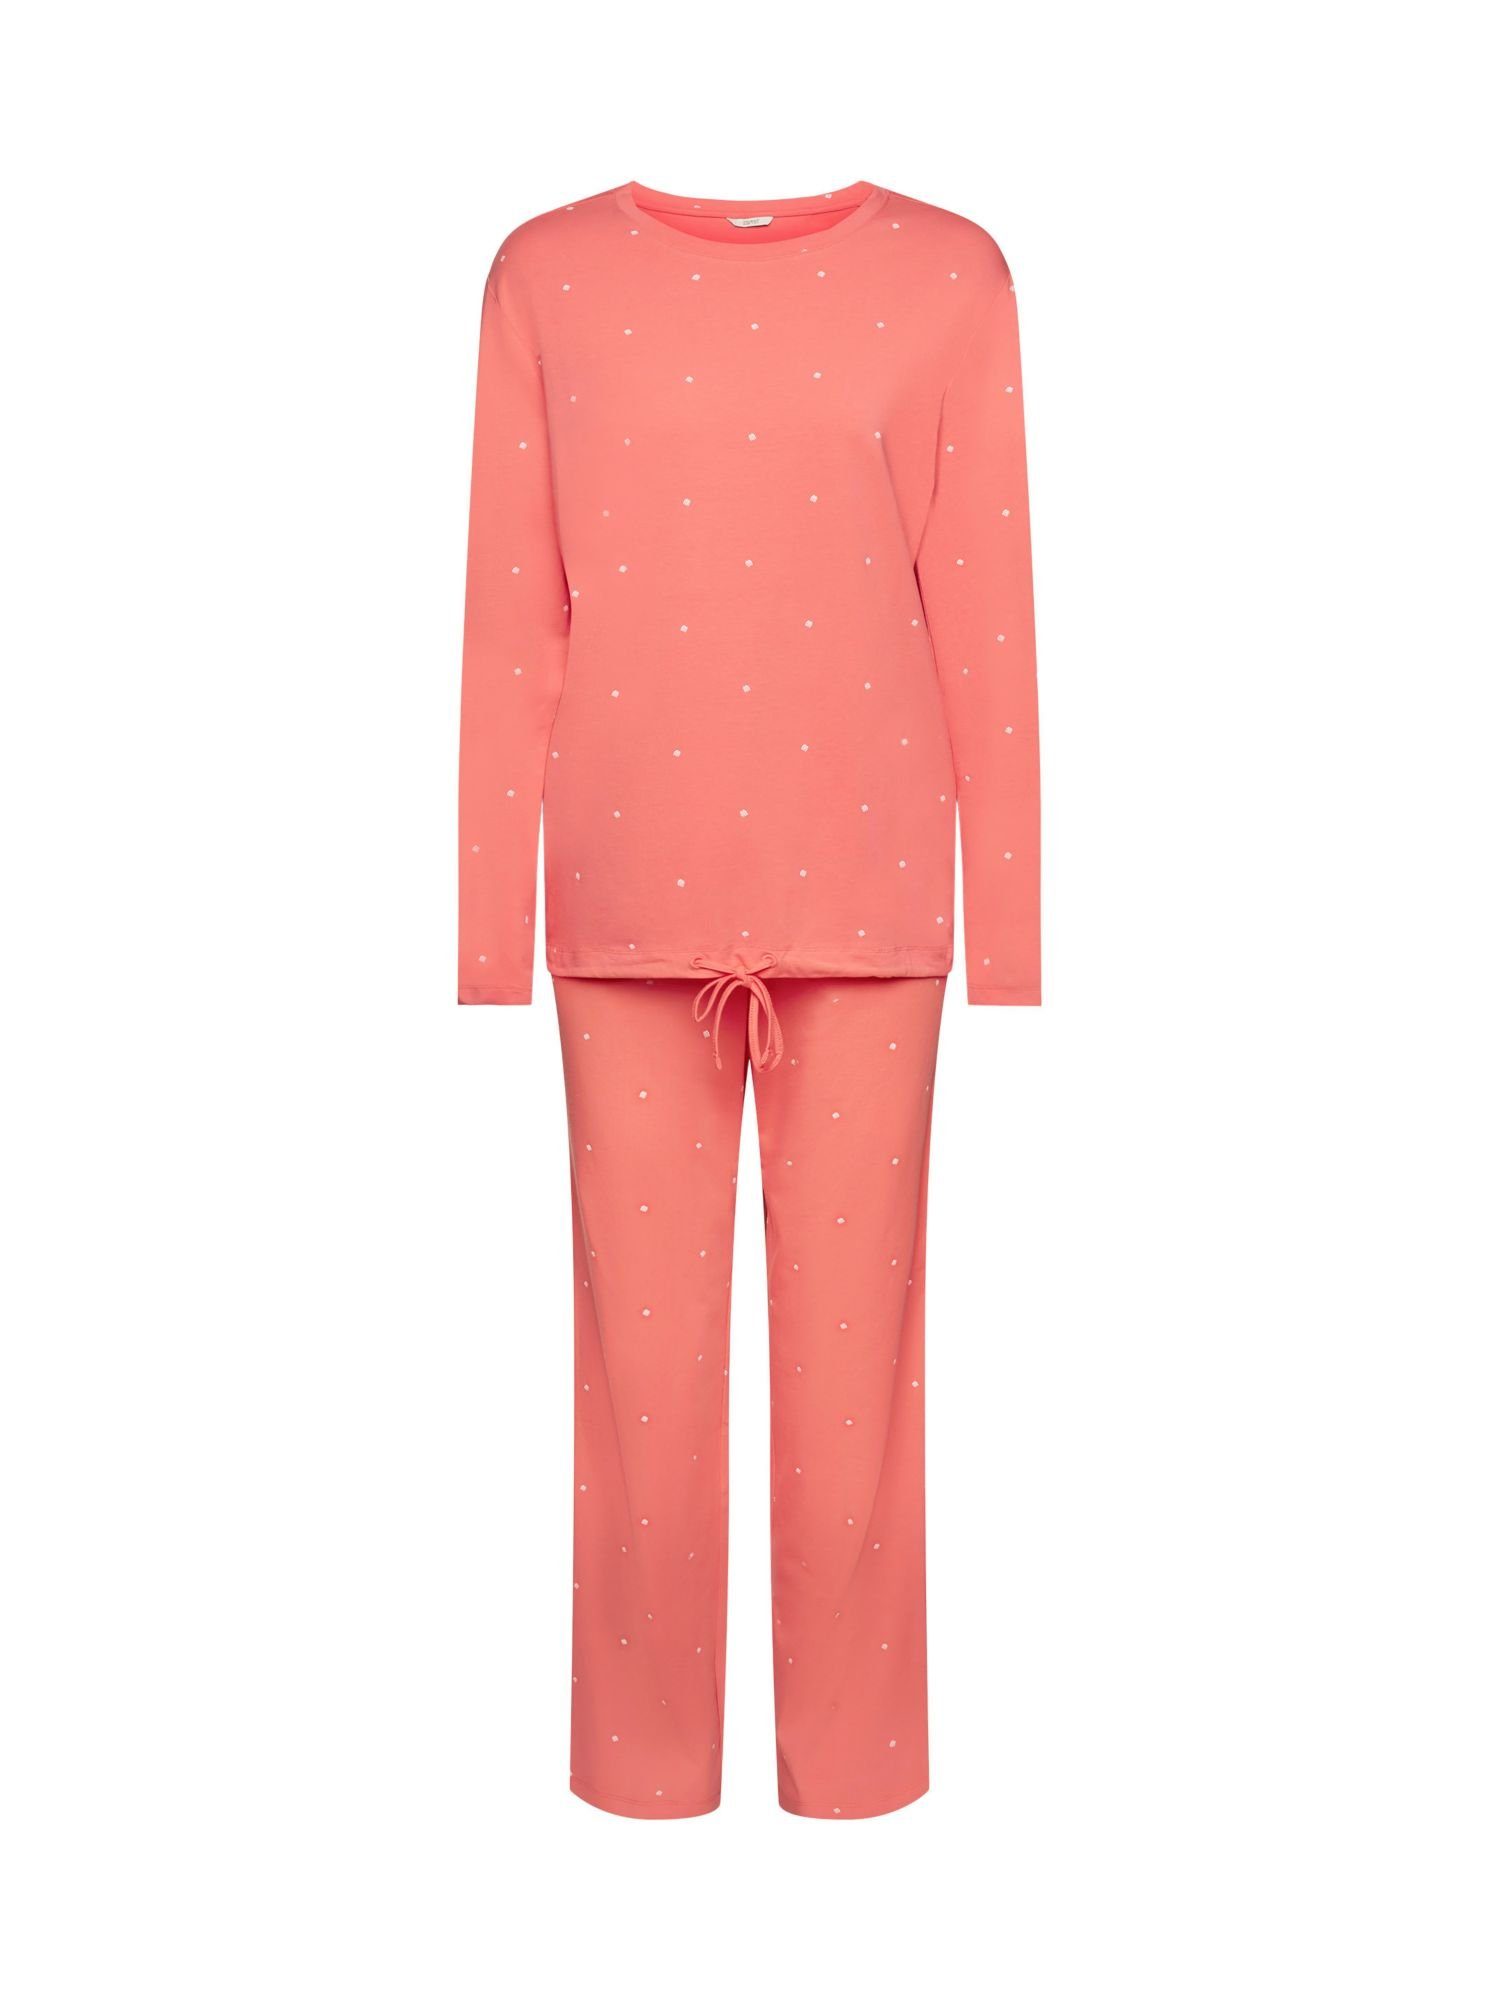 Esprit Pyjama Baumwollpyjama mit Allover-Muster